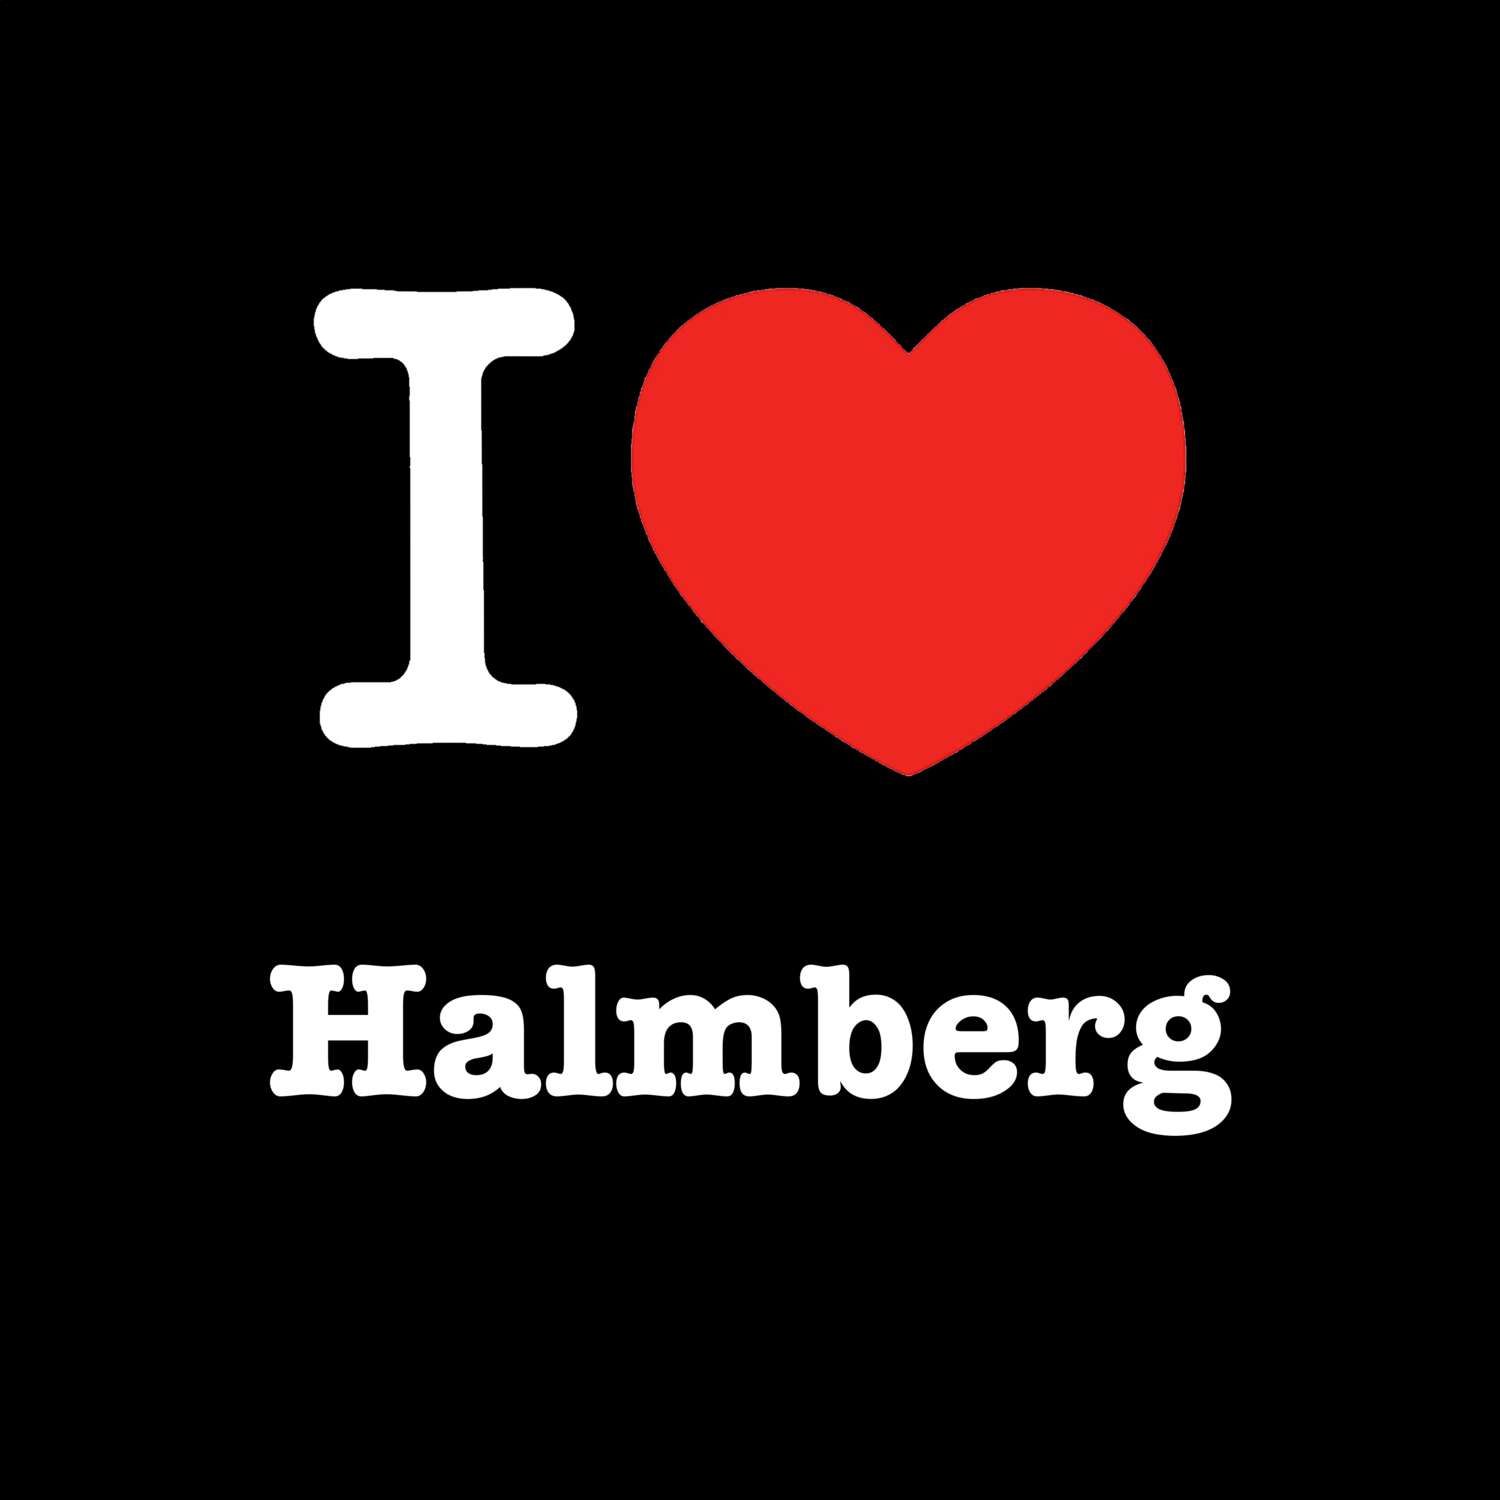 Halmberg T-Shirt »I love«